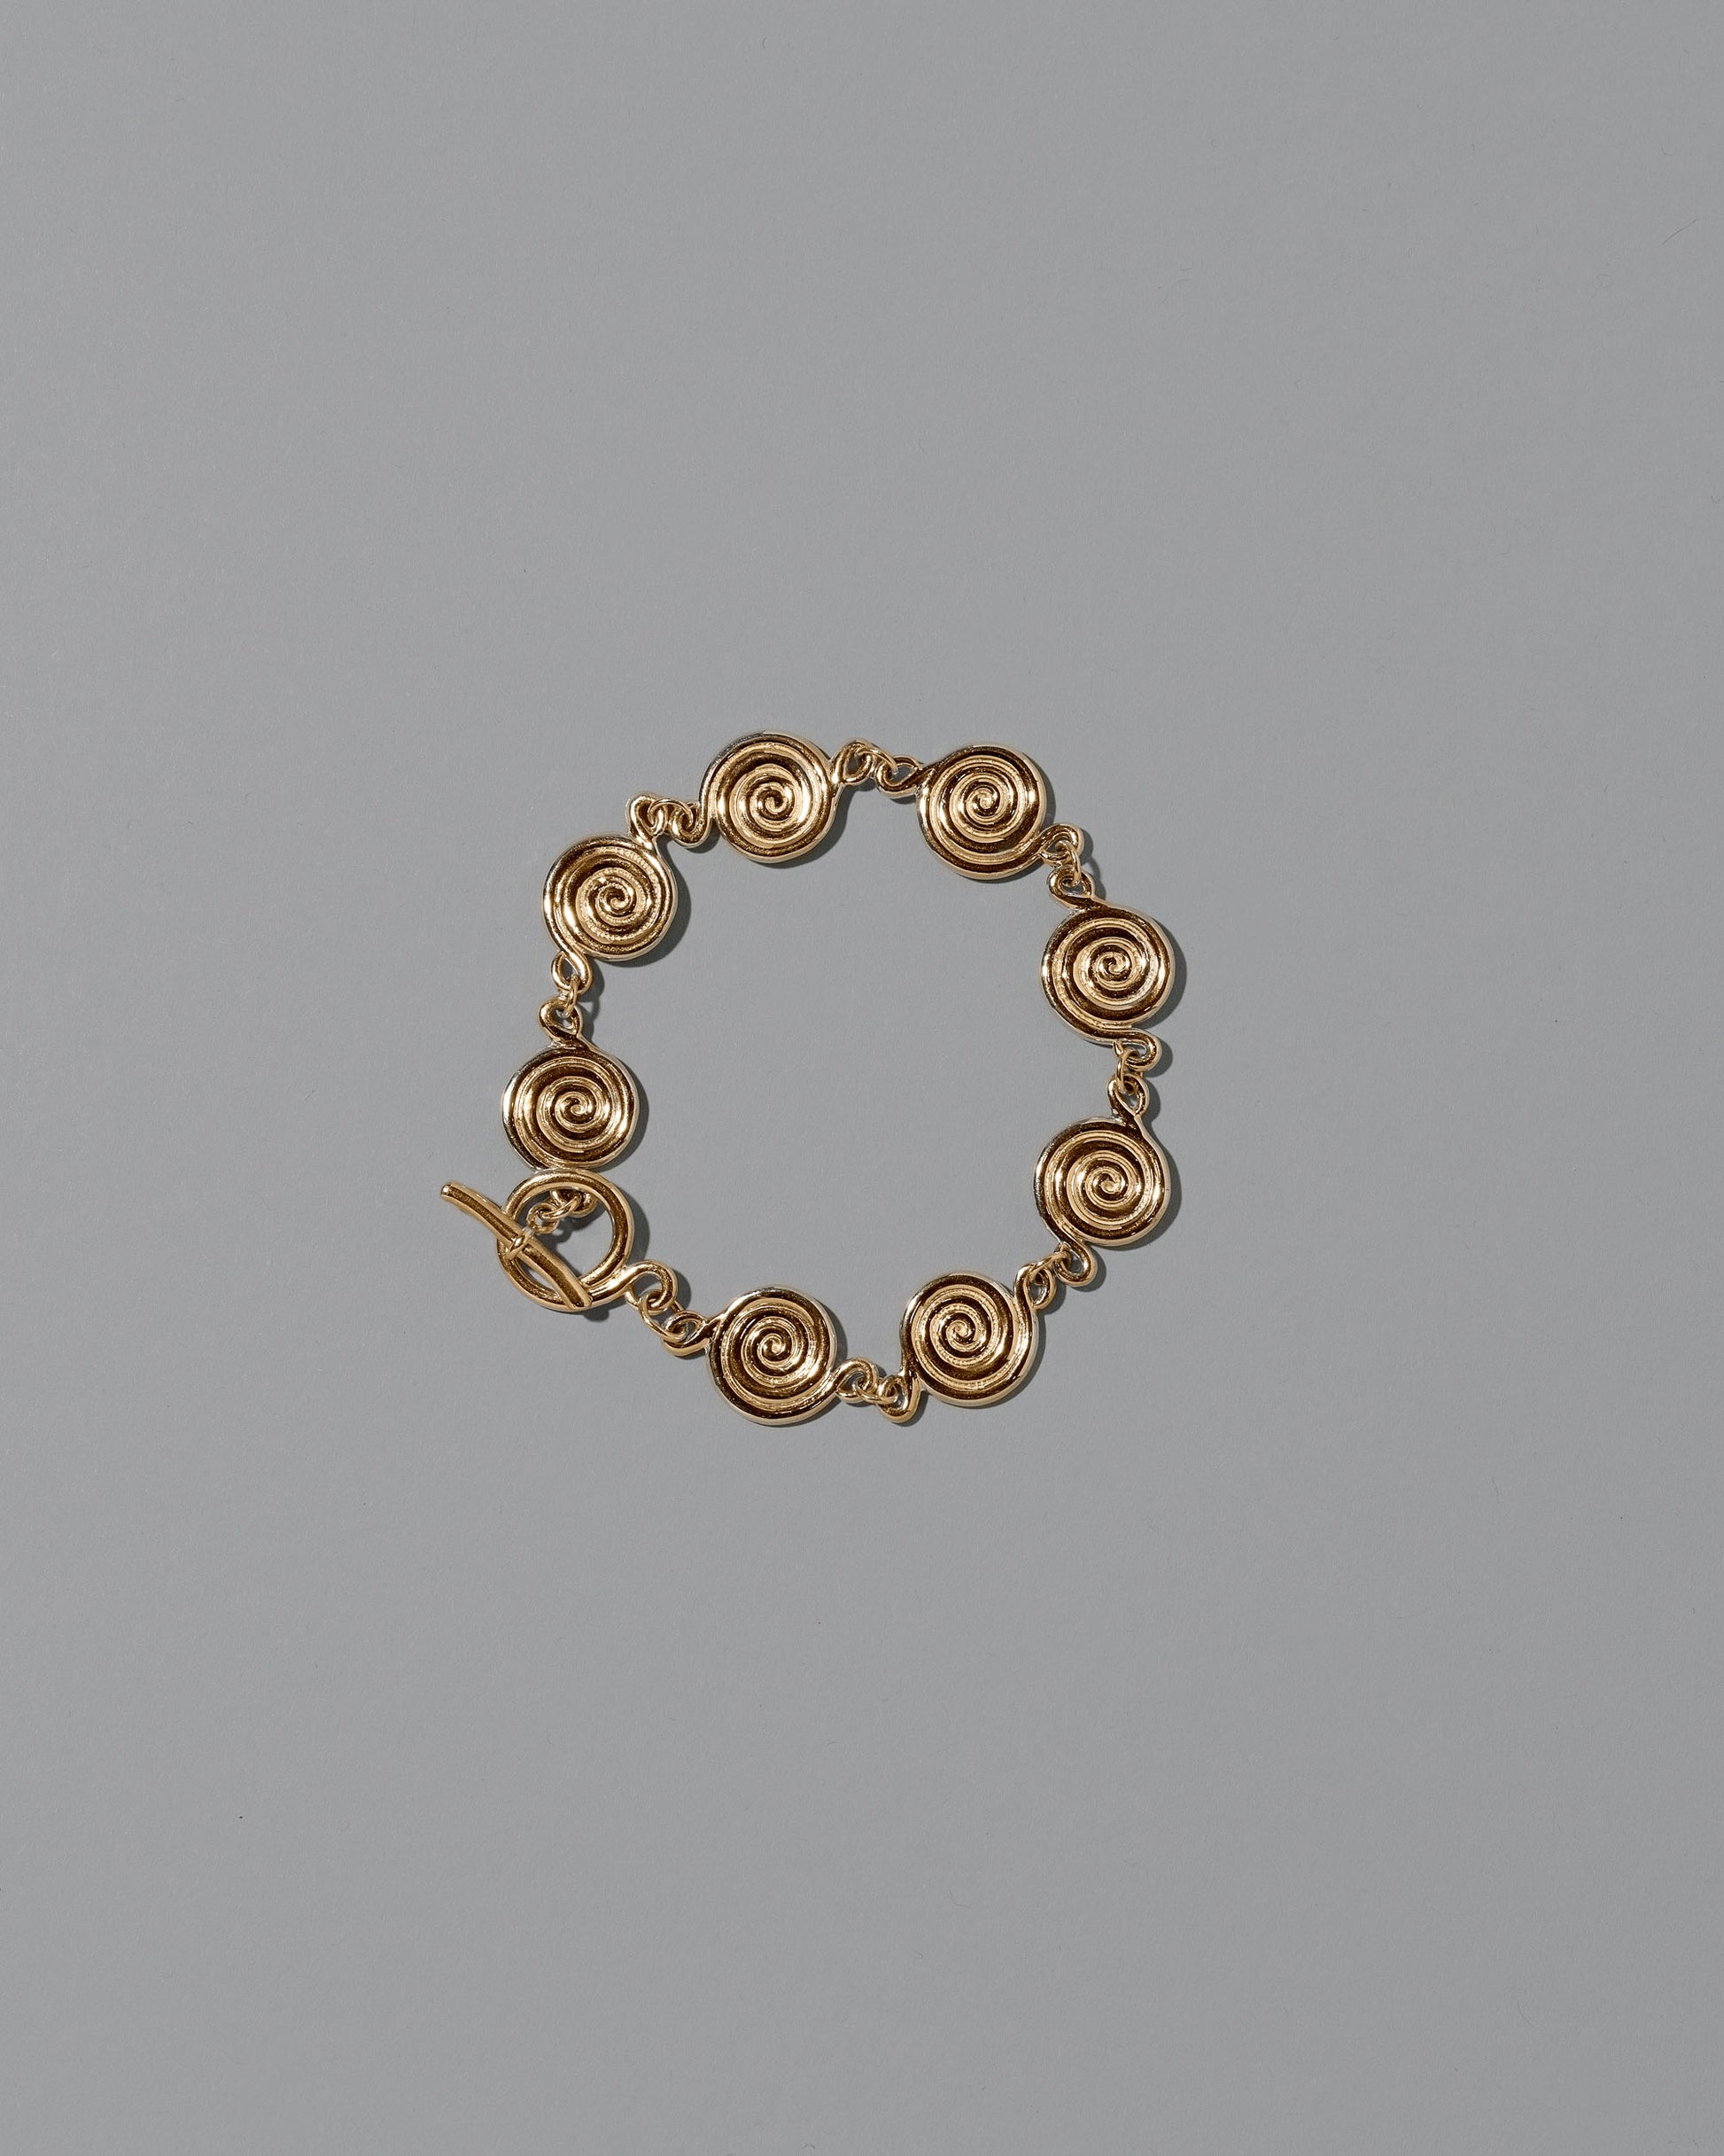 CRZM 22k Gold Serpentinite Bracelet on light color background.